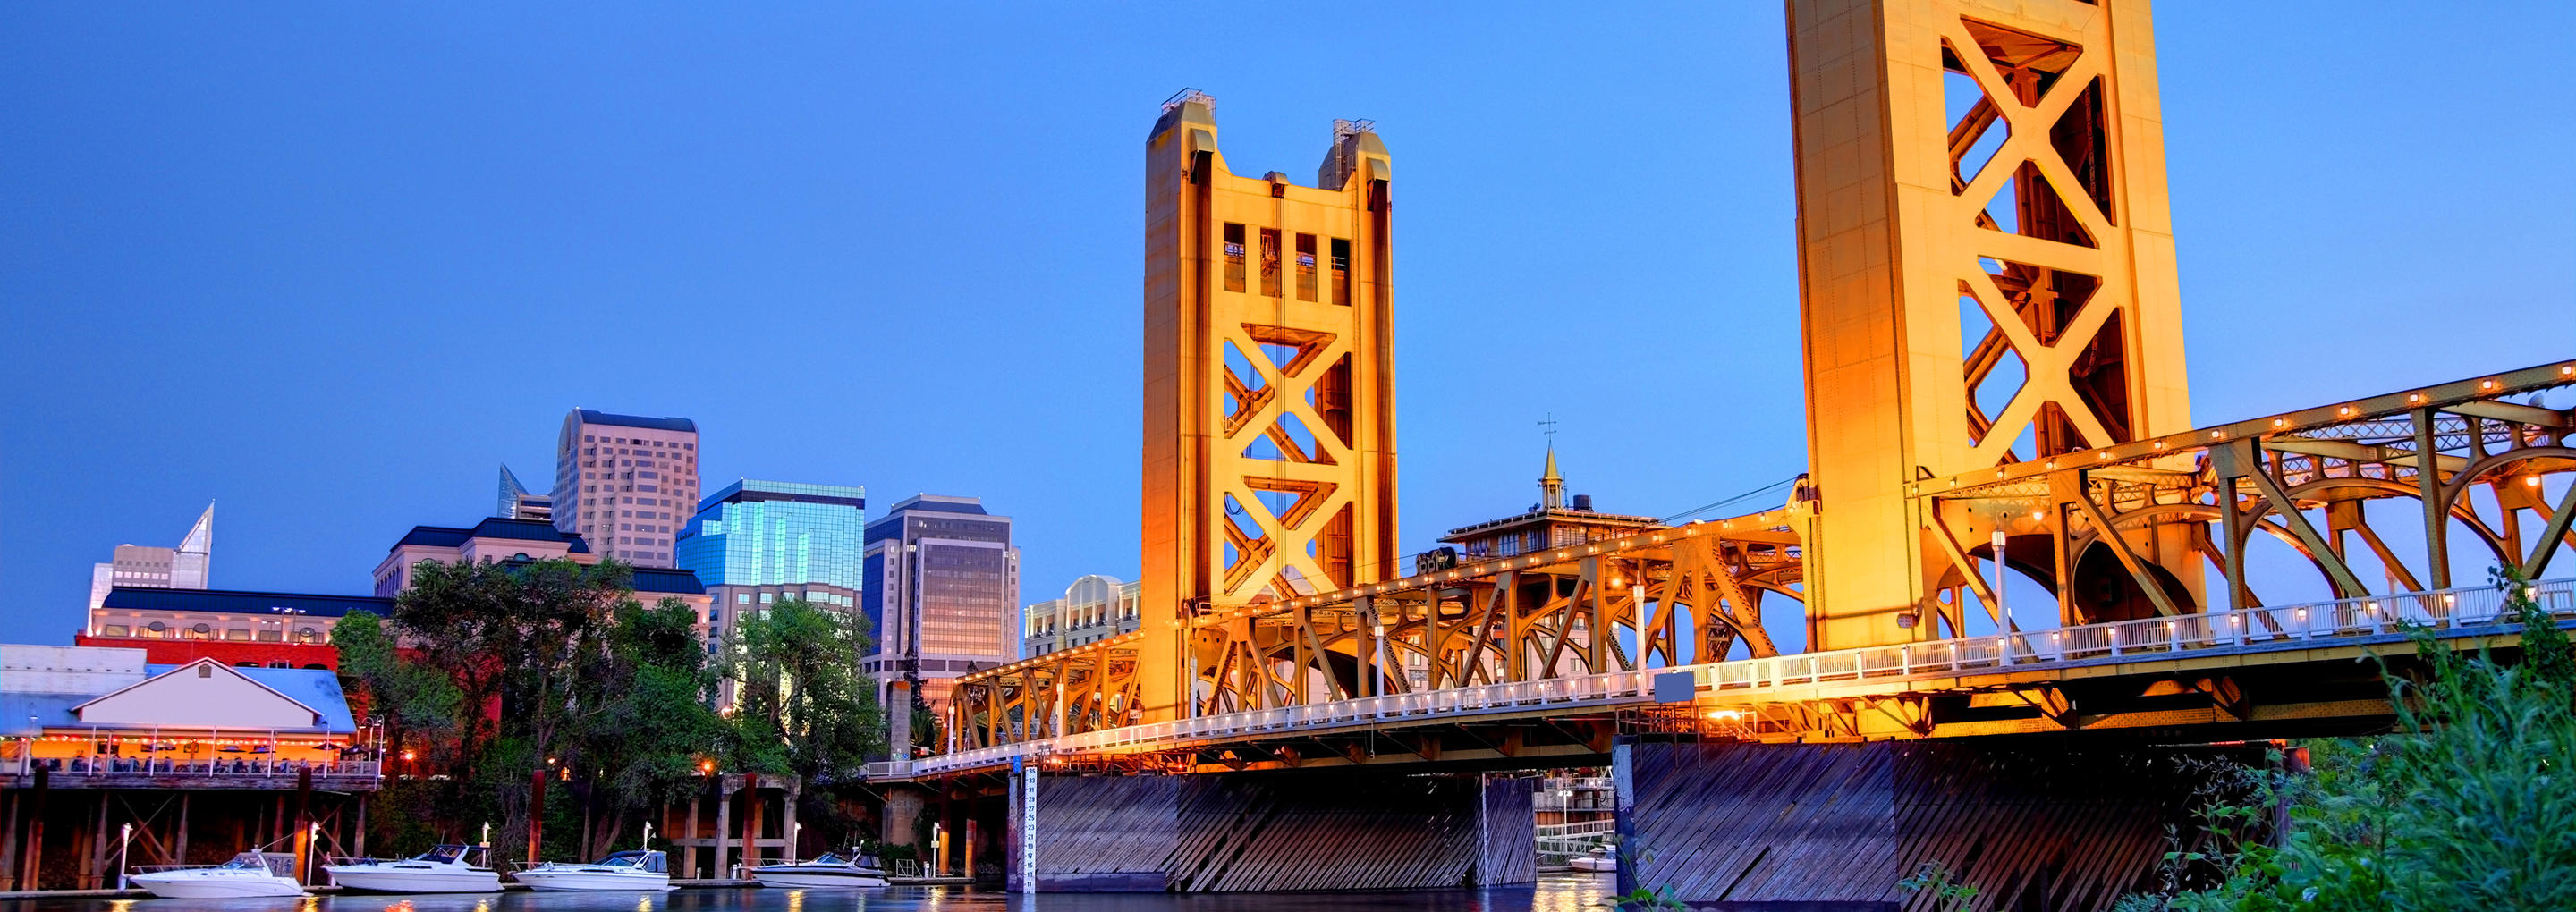 Bridge in downtown Sacramento California